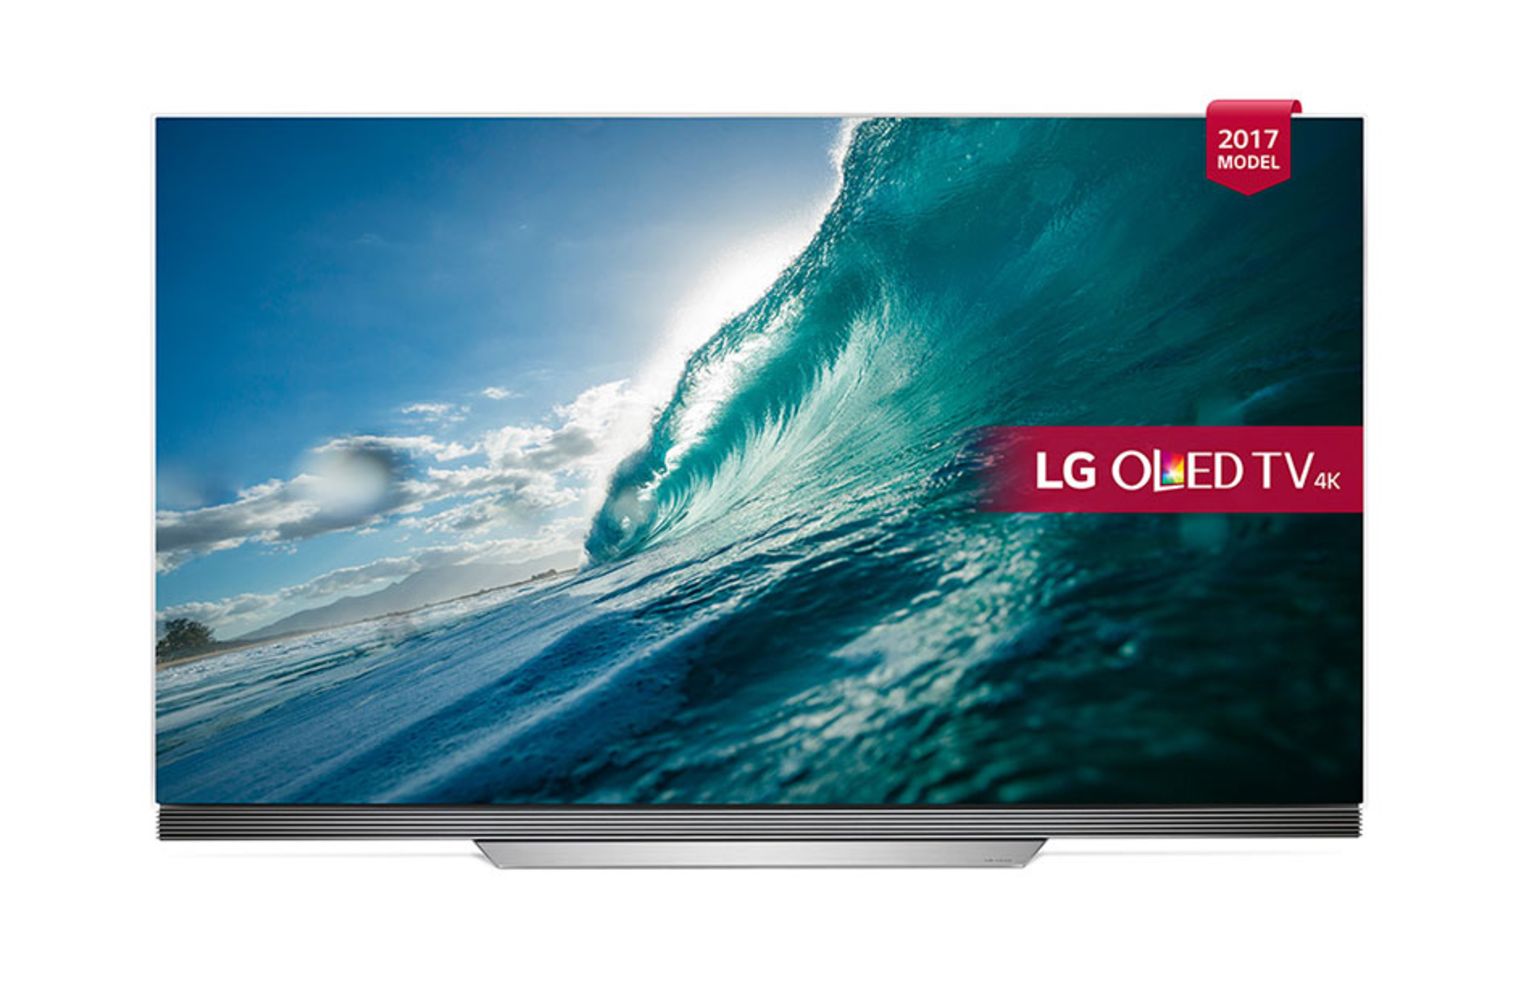 LG TVs & Monitors - Including 4K UHD Smart TVs In A Range Of Sizes